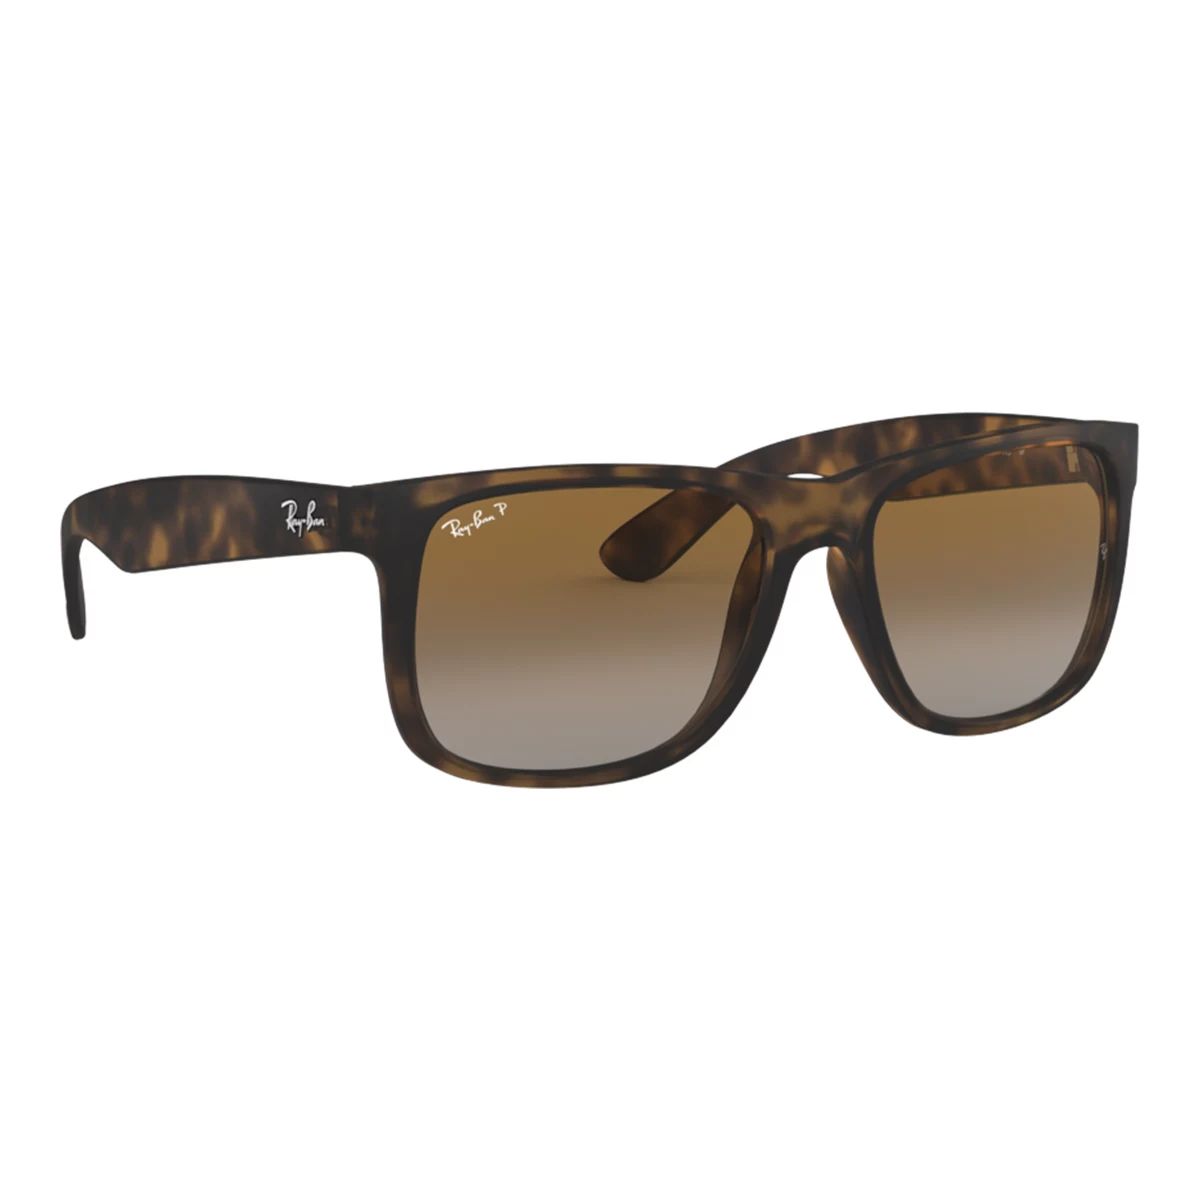 Image of Ray Ban Men's/Women's Justin Square Sunglasses Polarized